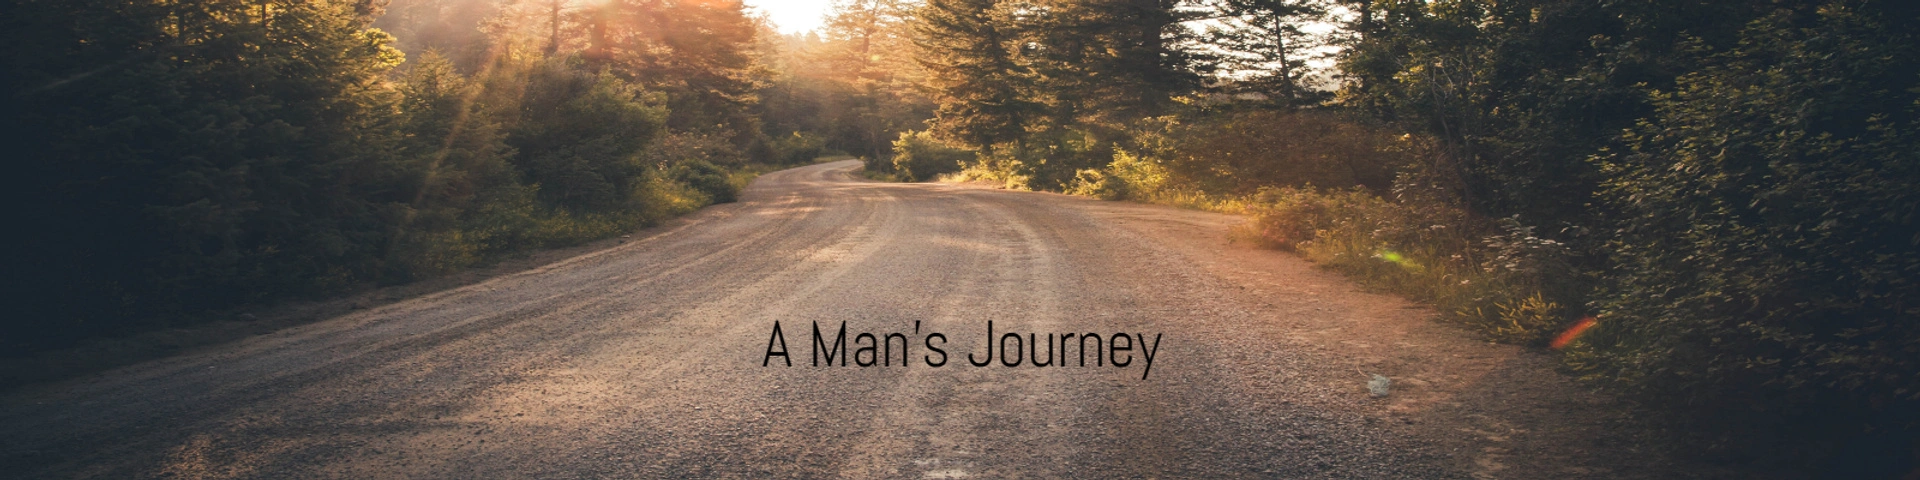 A Man's journey [v0.2] main image